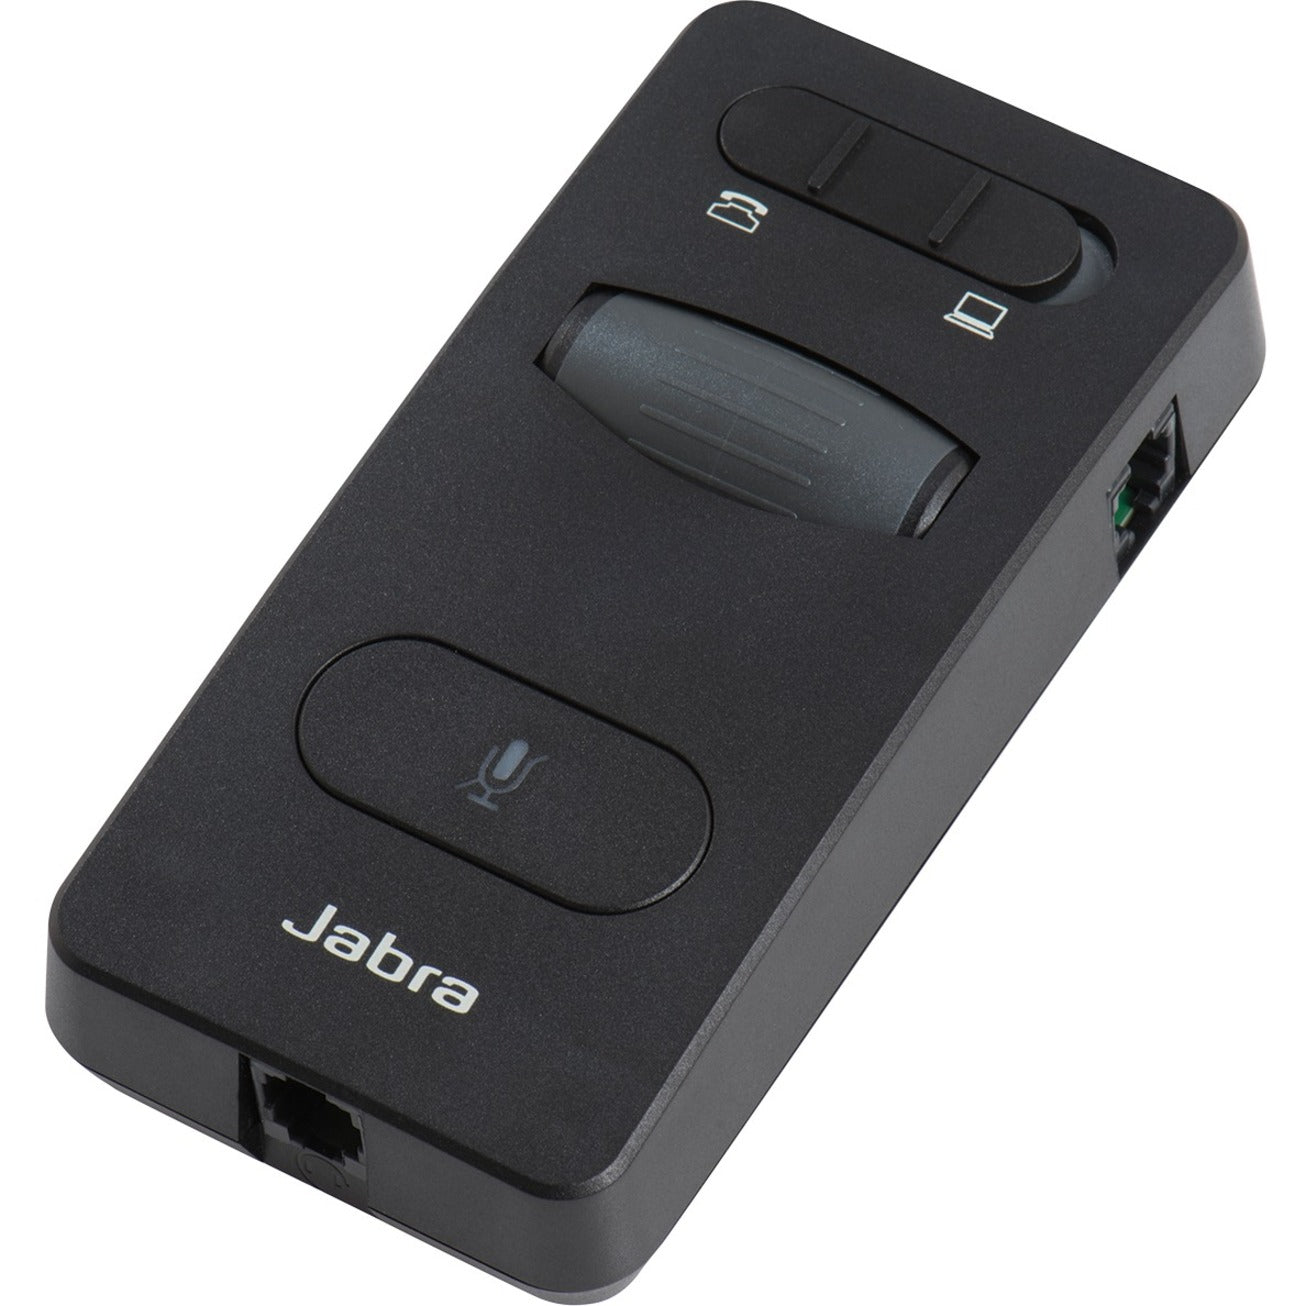 Jabra 860-09 LINK 860 Headphone Sound Processor, Enhance Your PC and Headphone Audio